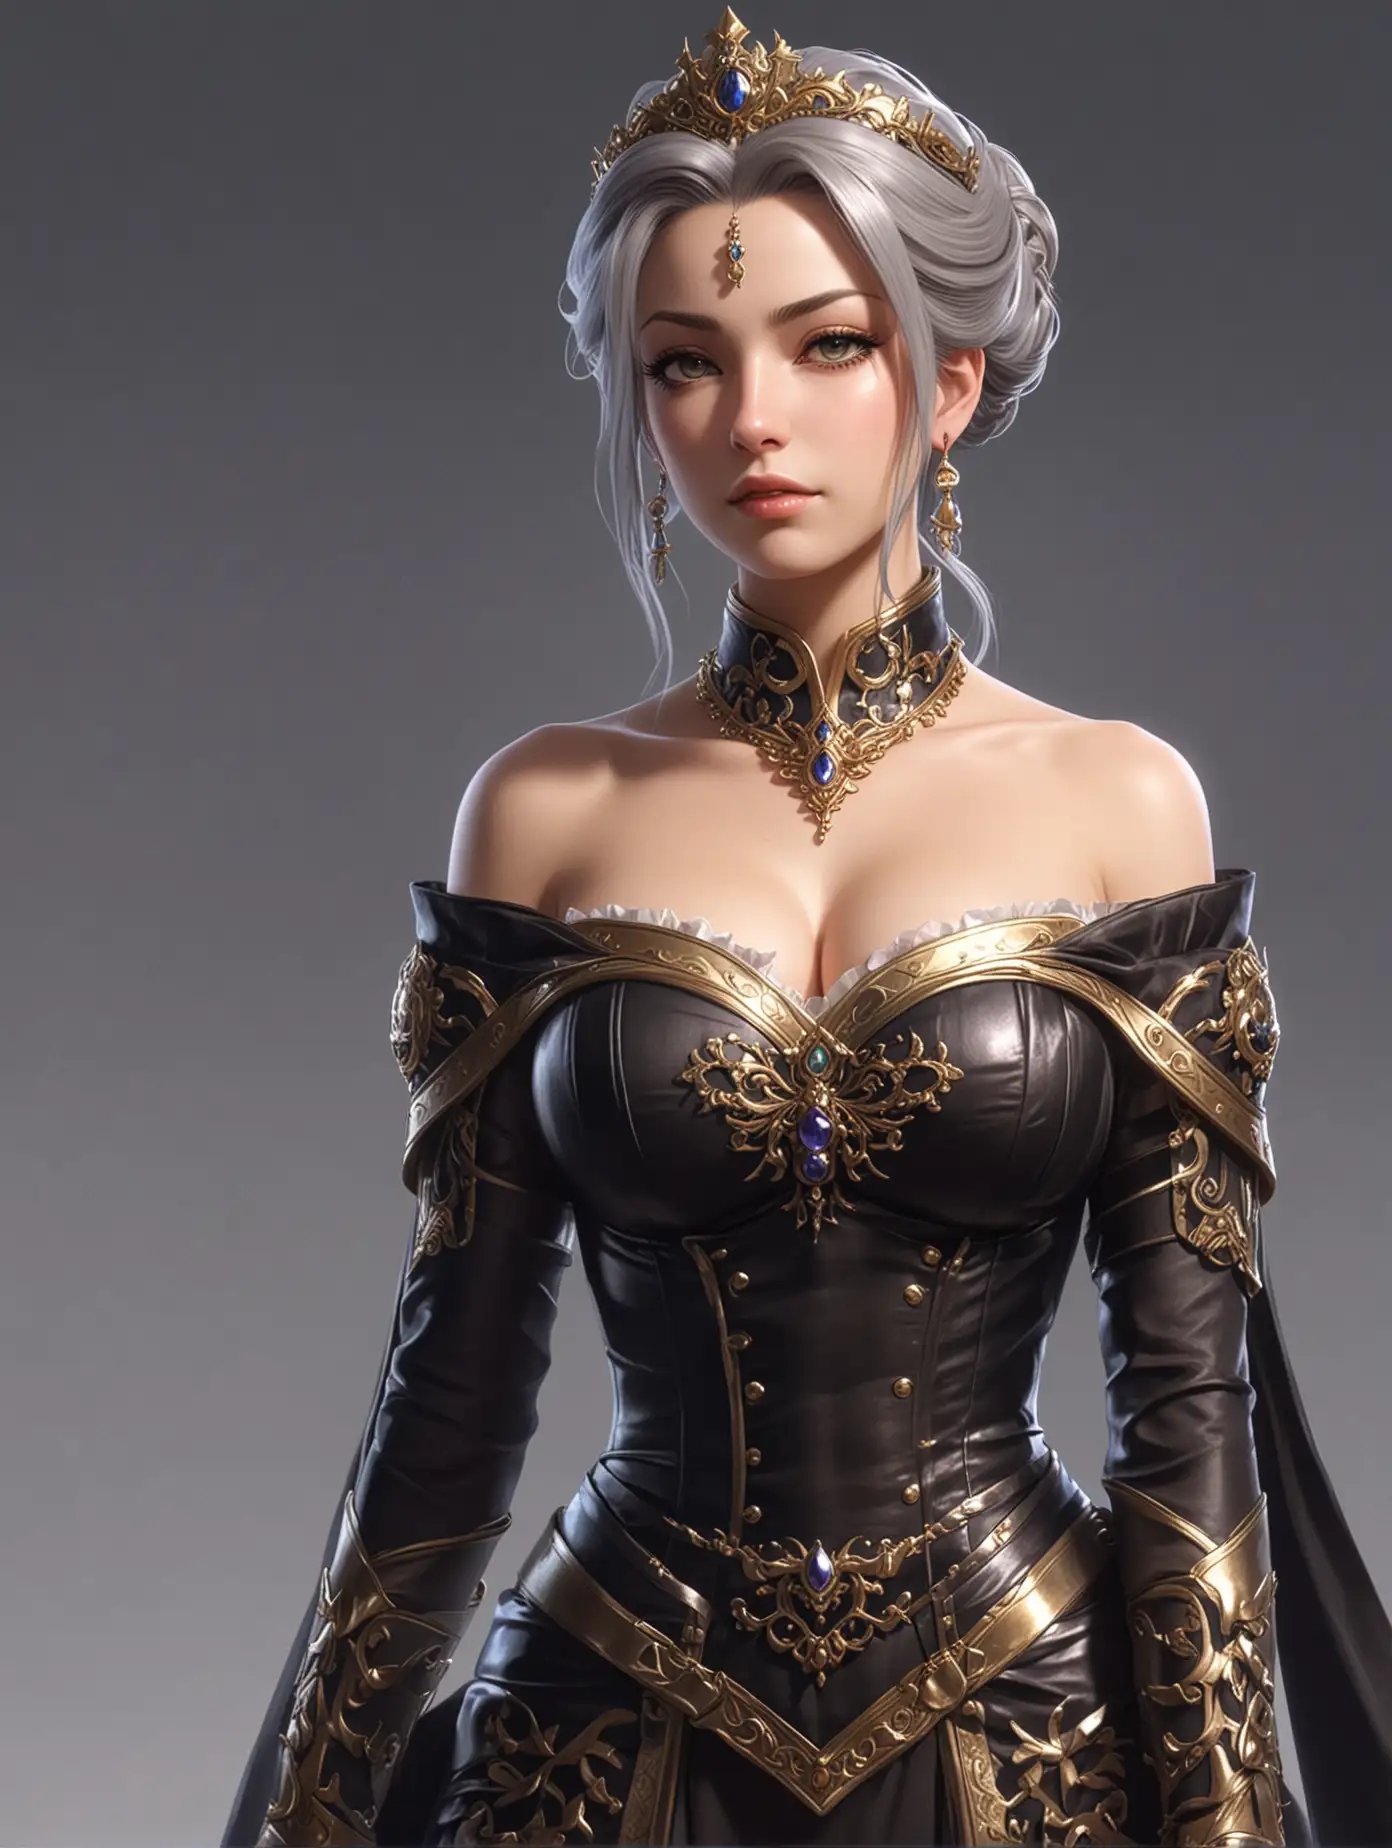 Smug Empress in Dark Regal Dress Fantasy Portrait